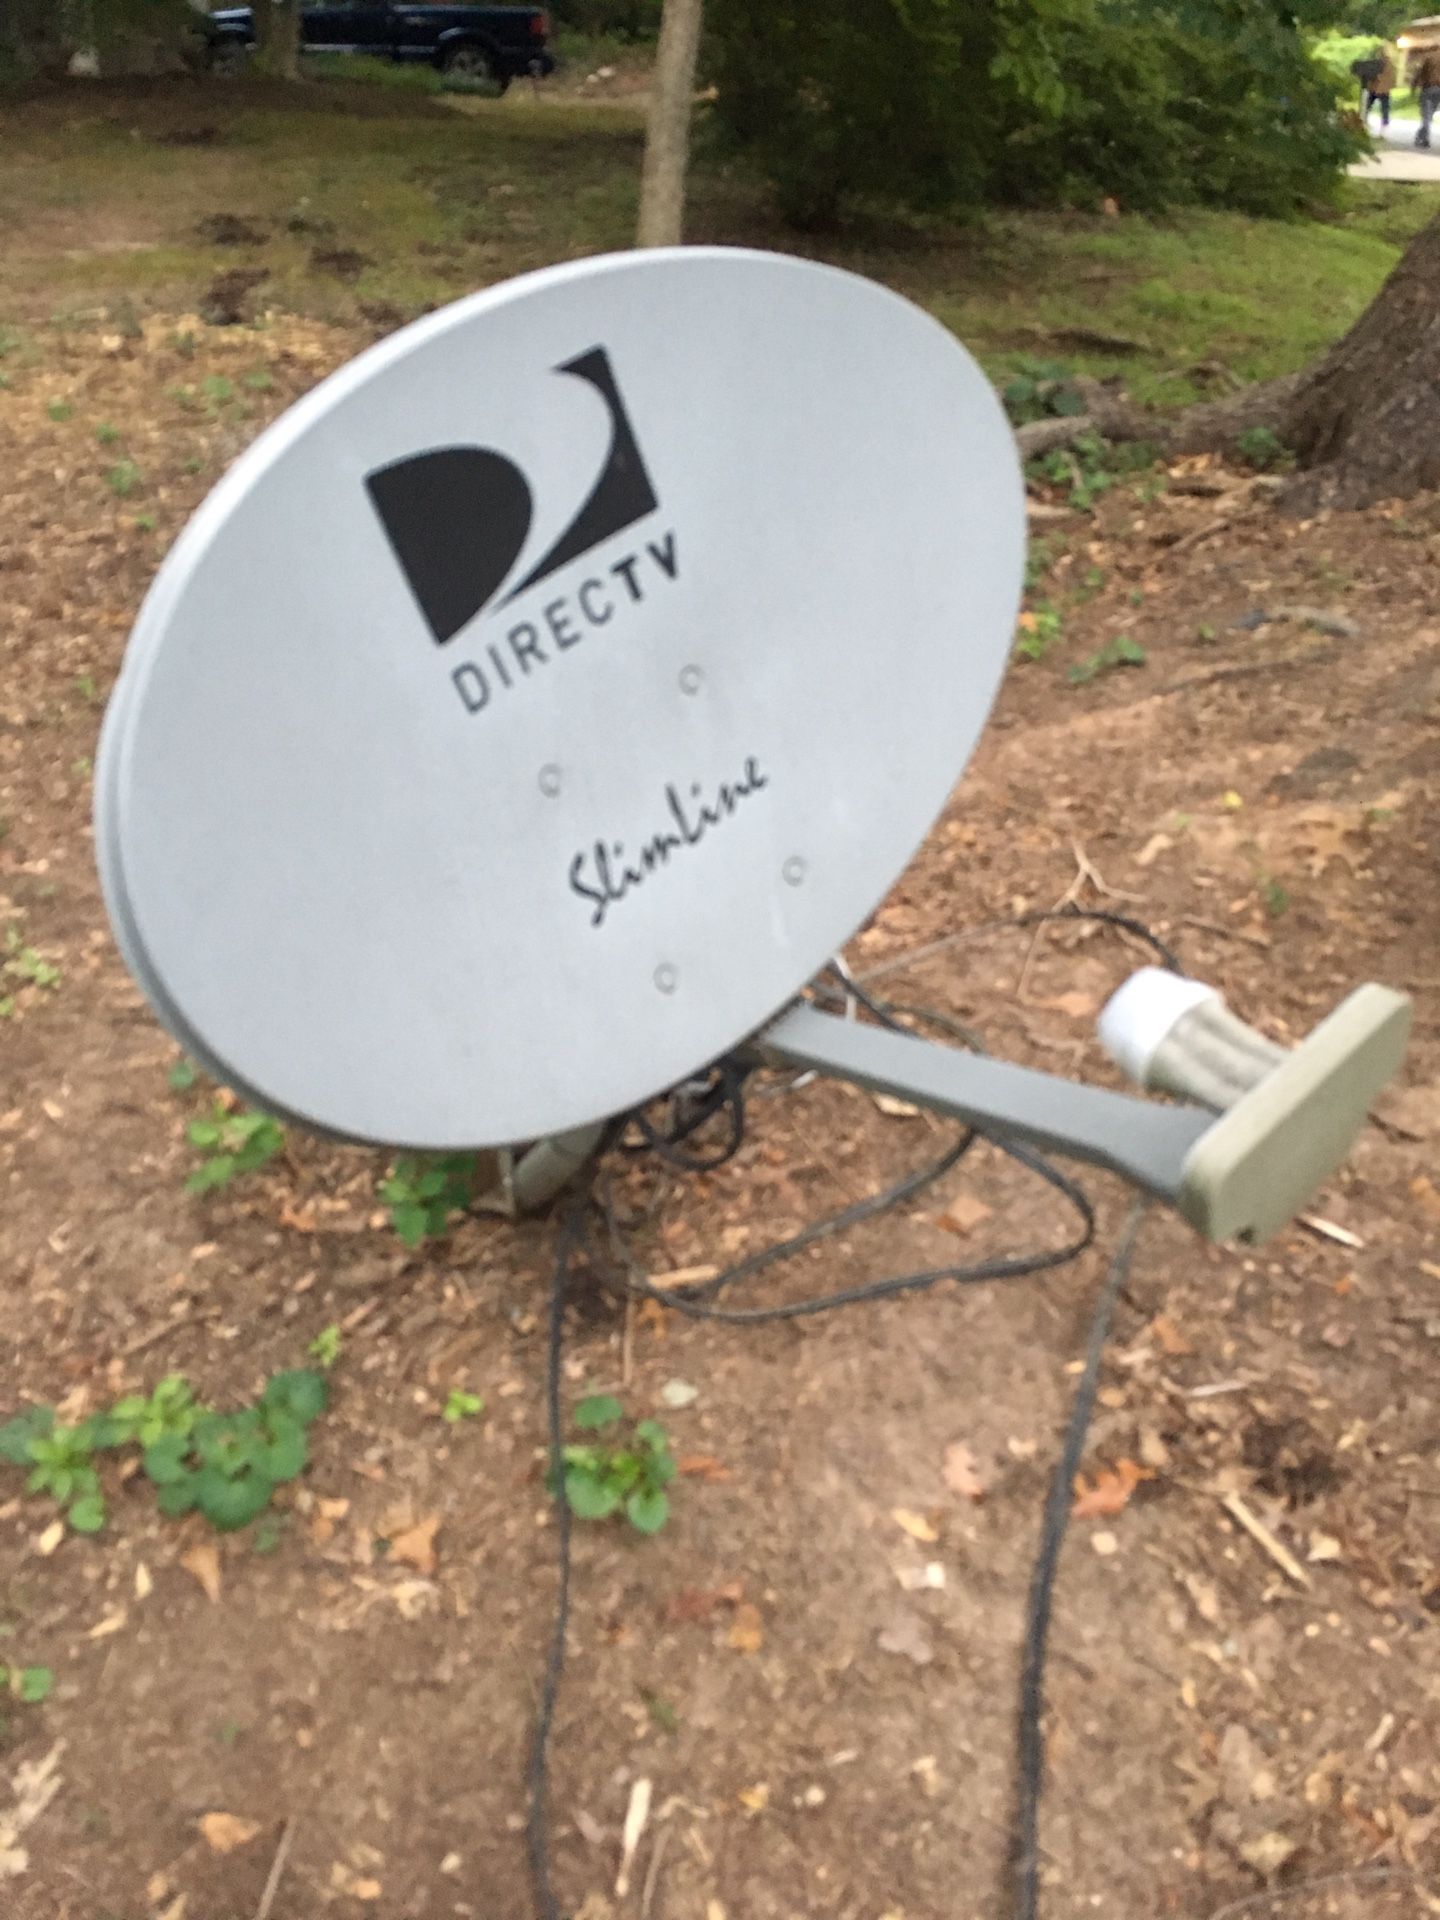 Direct TV satellite dish